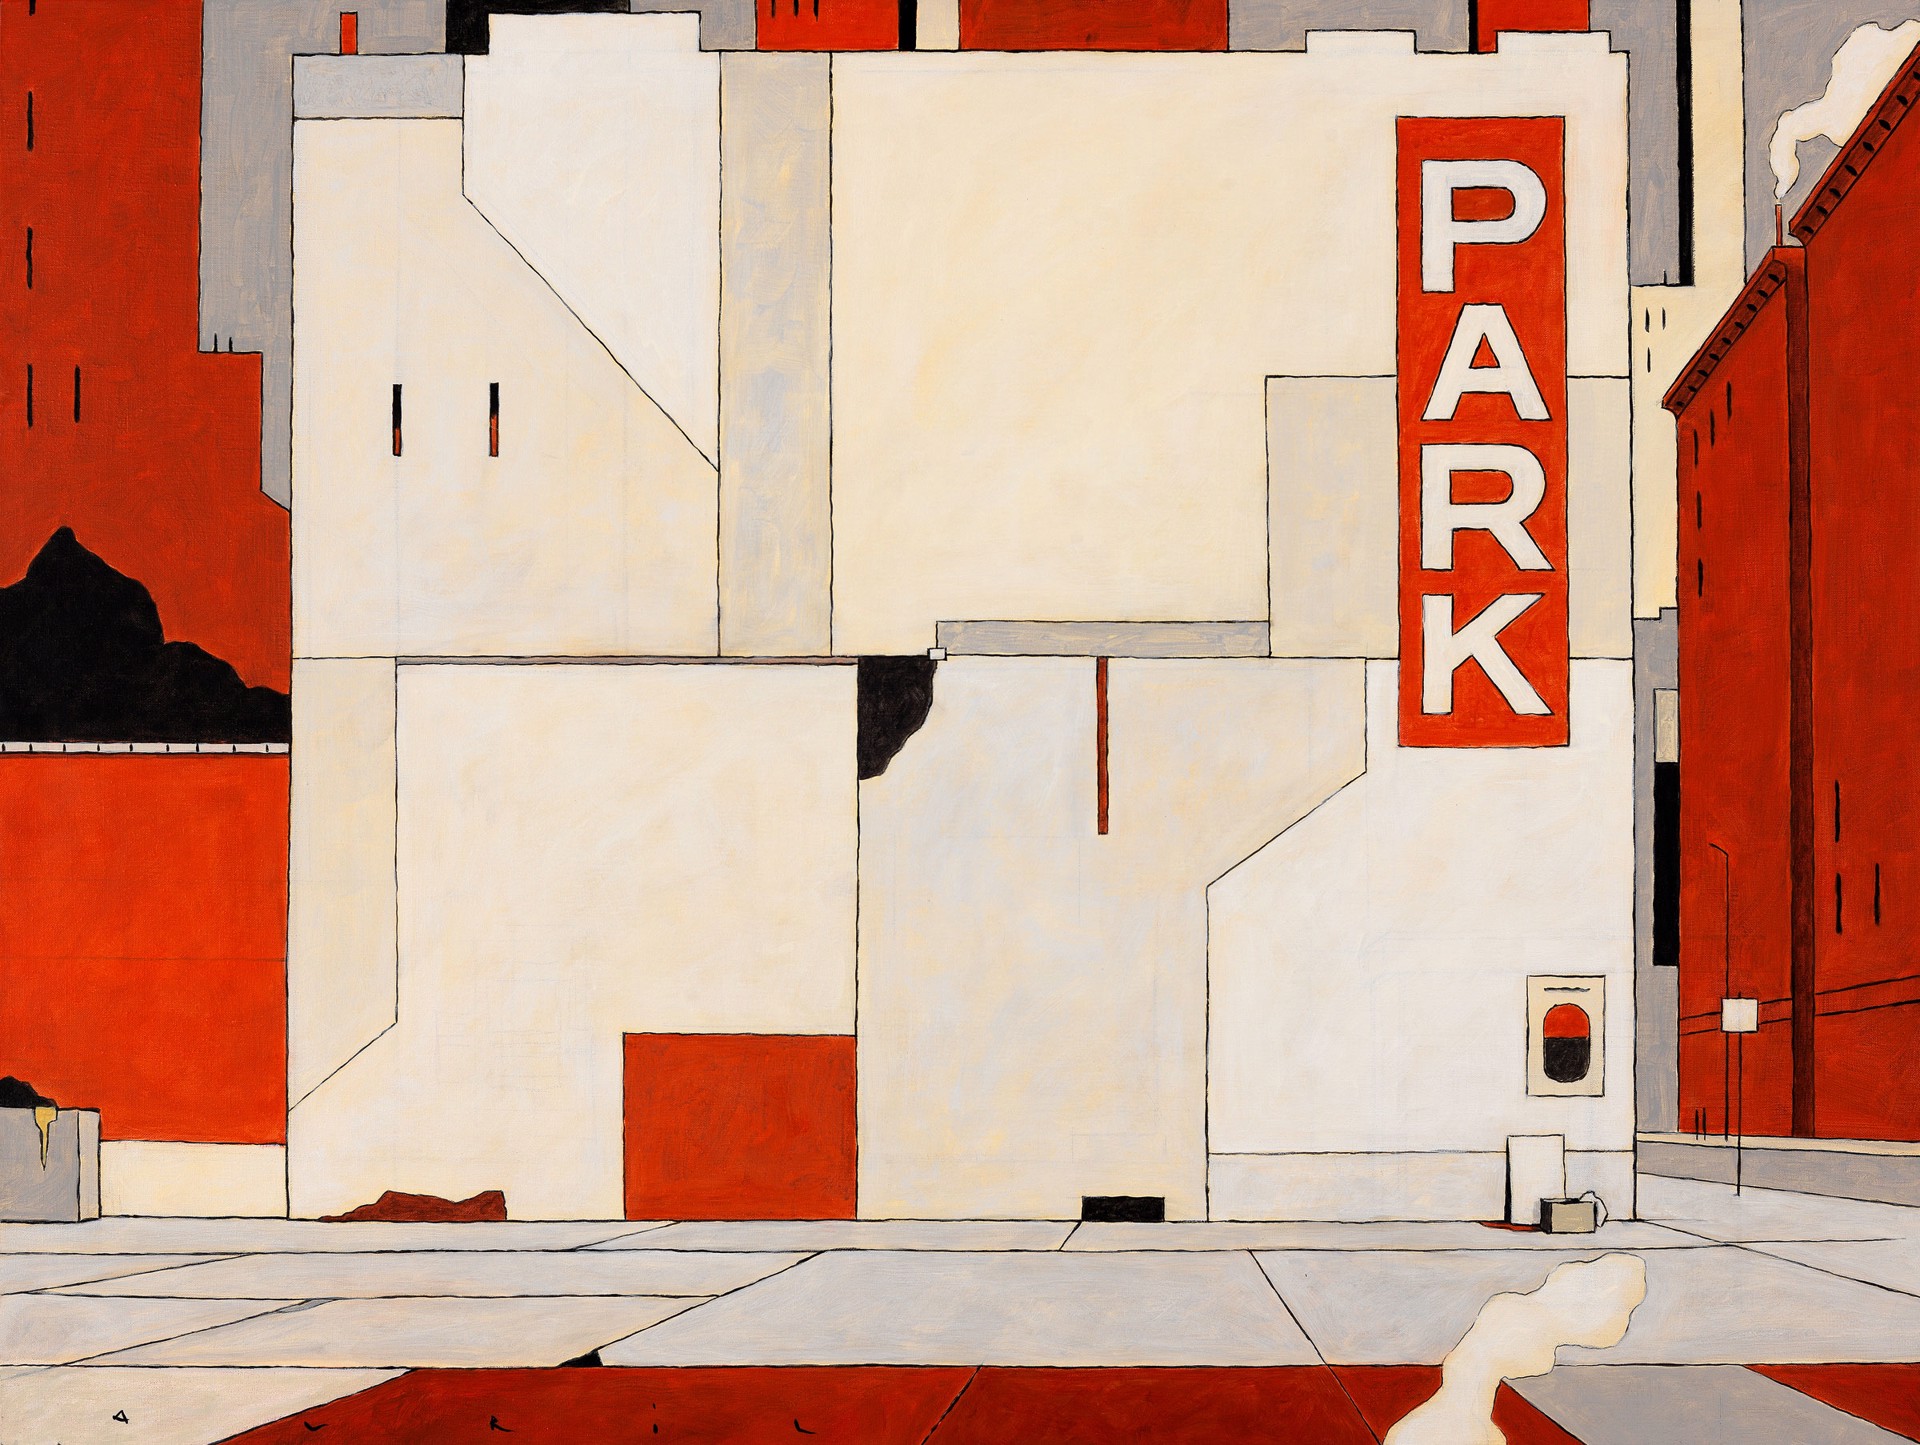 Parking - New York by François Avril